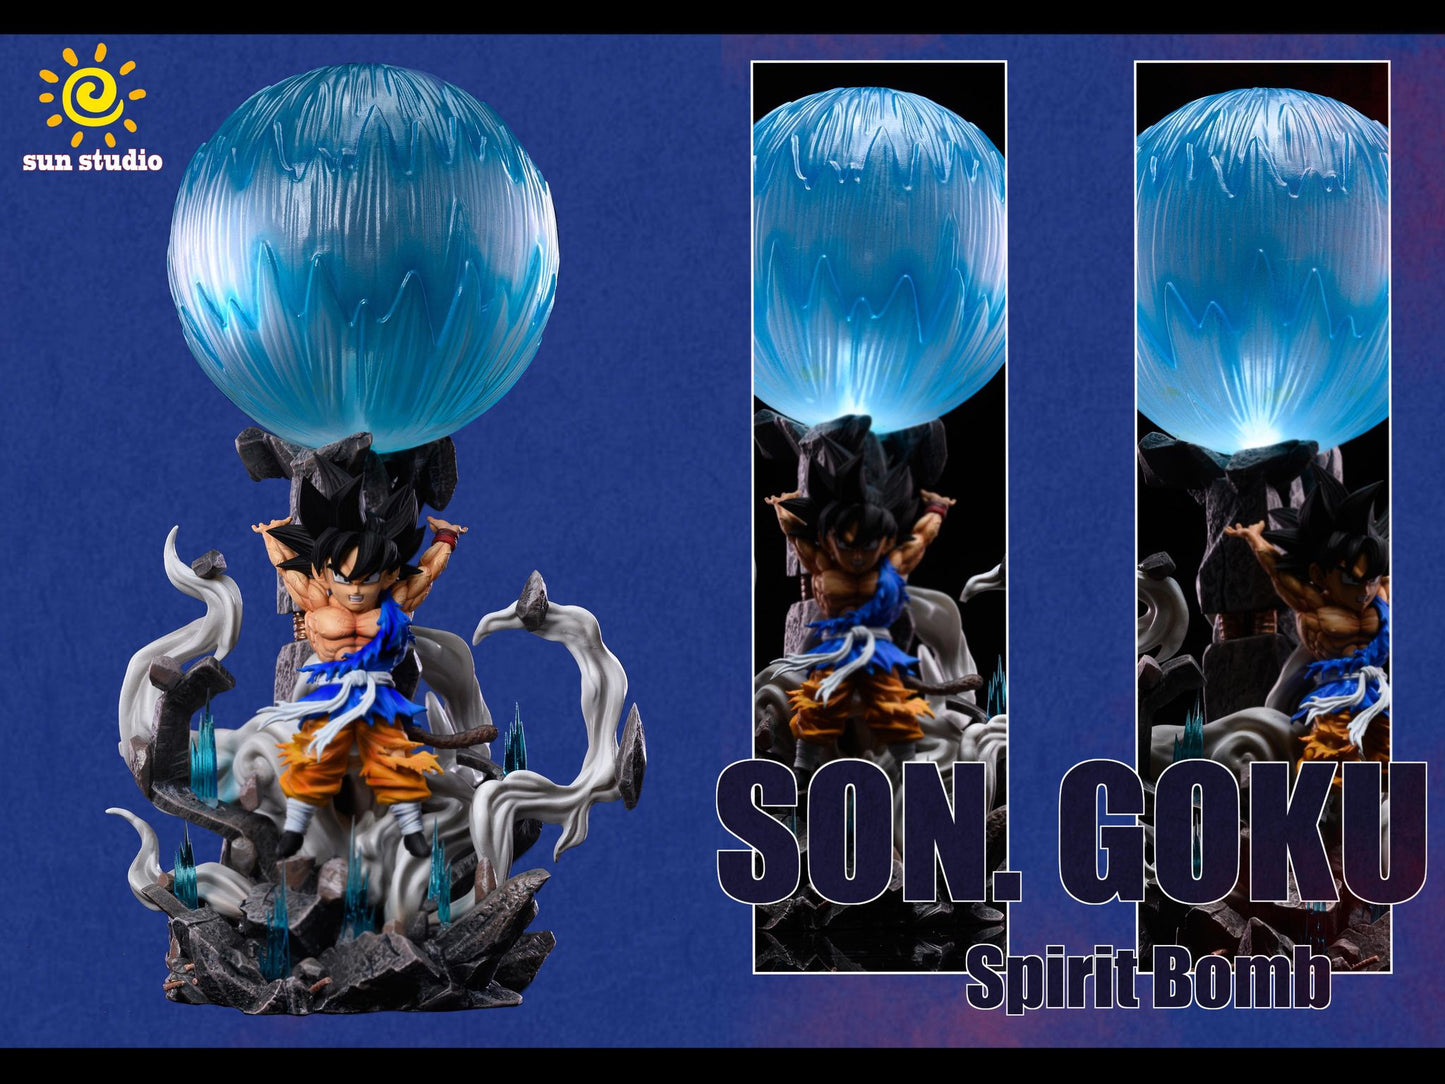 SUN STUDIO – DRAGON BALL Z: SPIRIT BOMB GOKU [SOLD OUT]